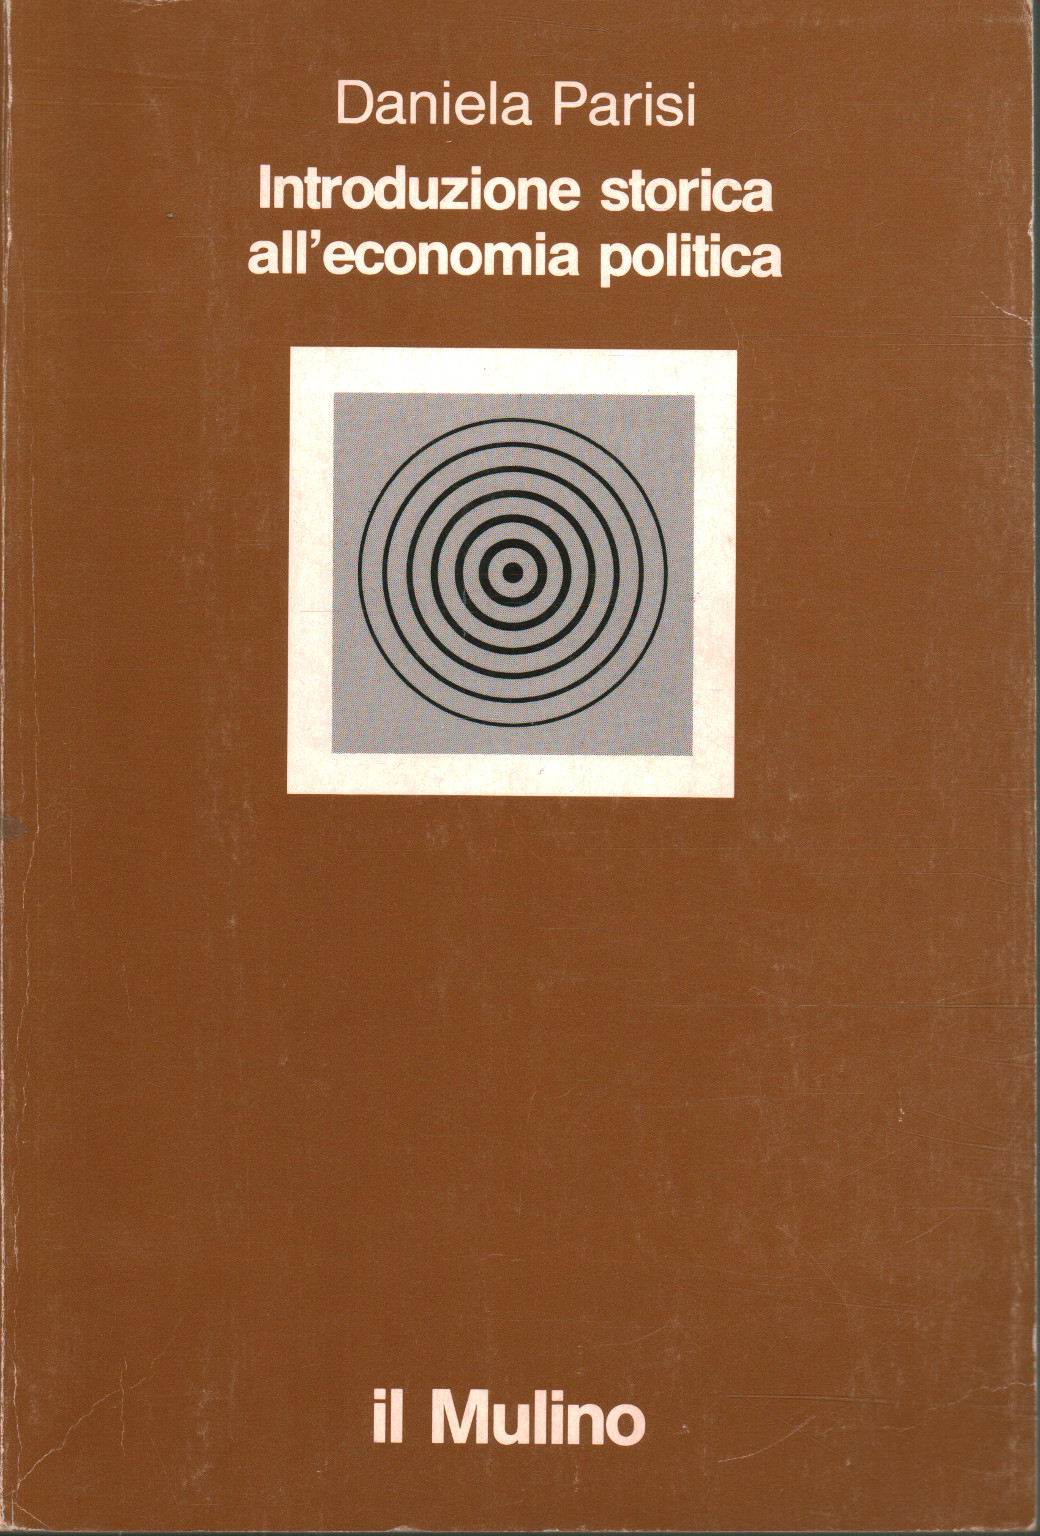 Historical introduction to political economy, Daniela Parisi